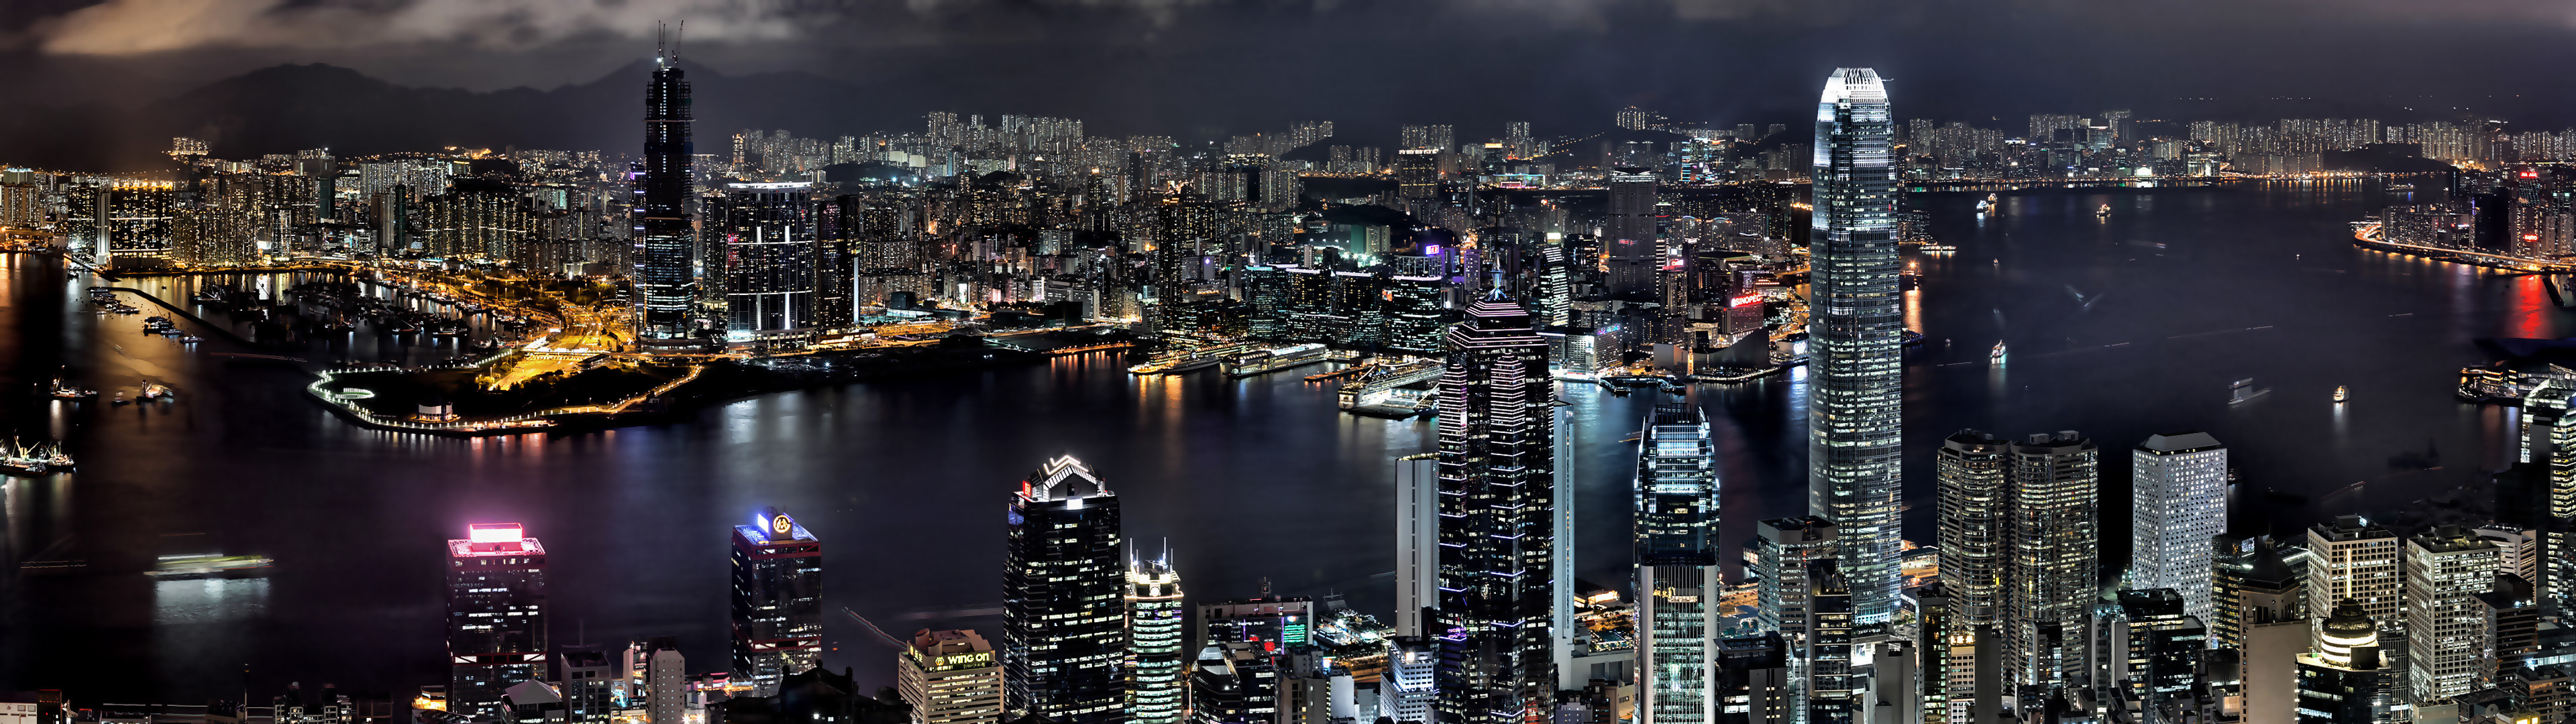 cityscapes_night_buildings_Hong_Kong_3840x1080.jpg